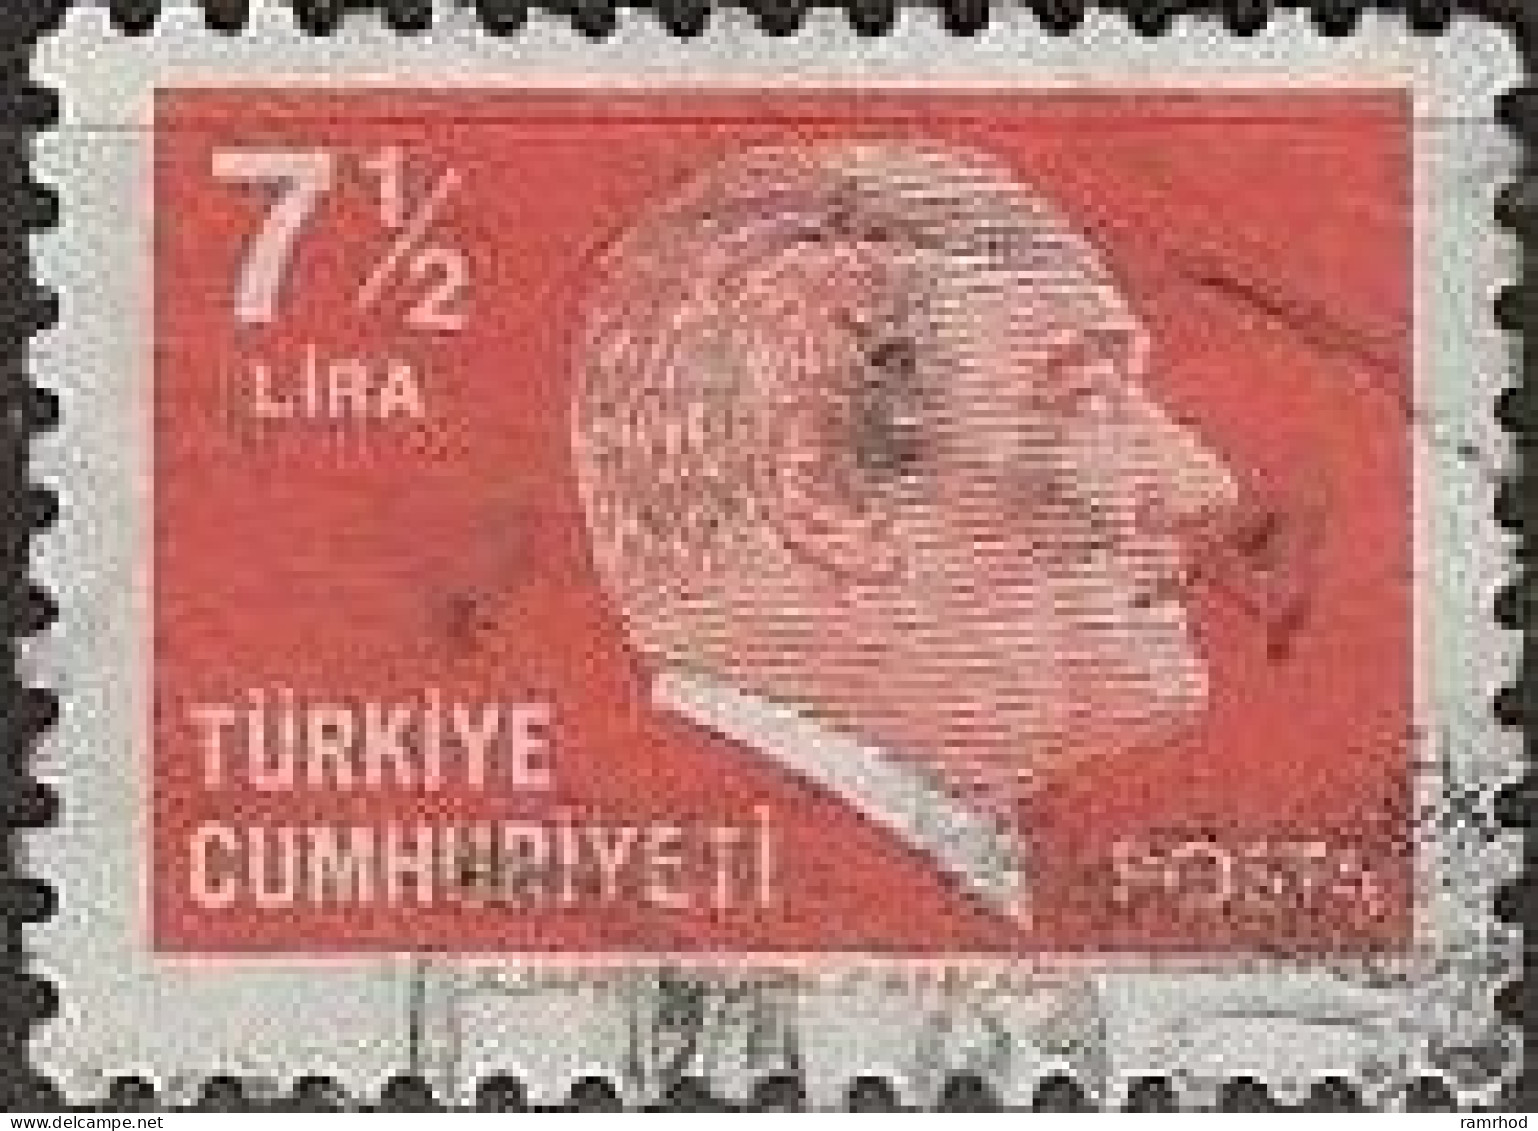 TURKEY 1979 Kemal Ataturk - 7½l. - Red FU - Used Stamps